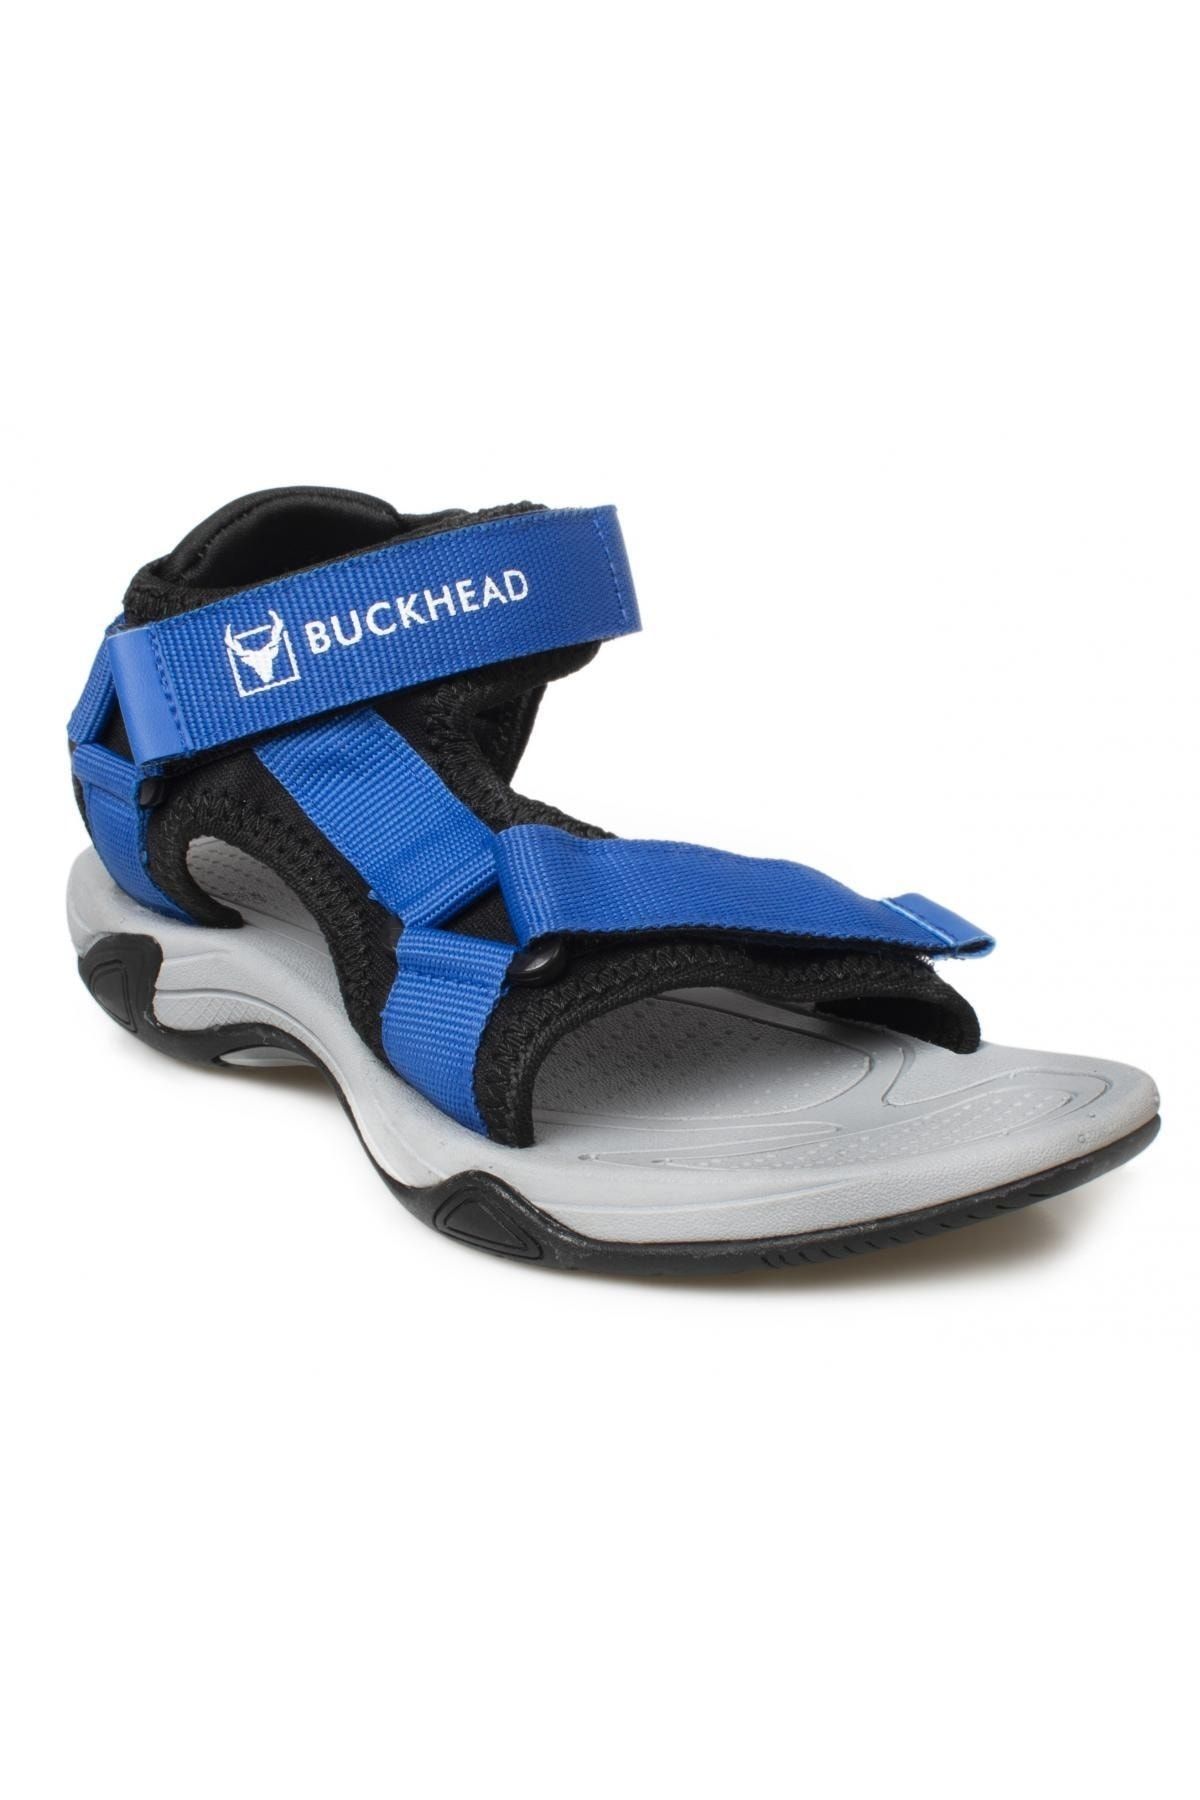 BUCKHEAD Mavi Çocuk Sandalet